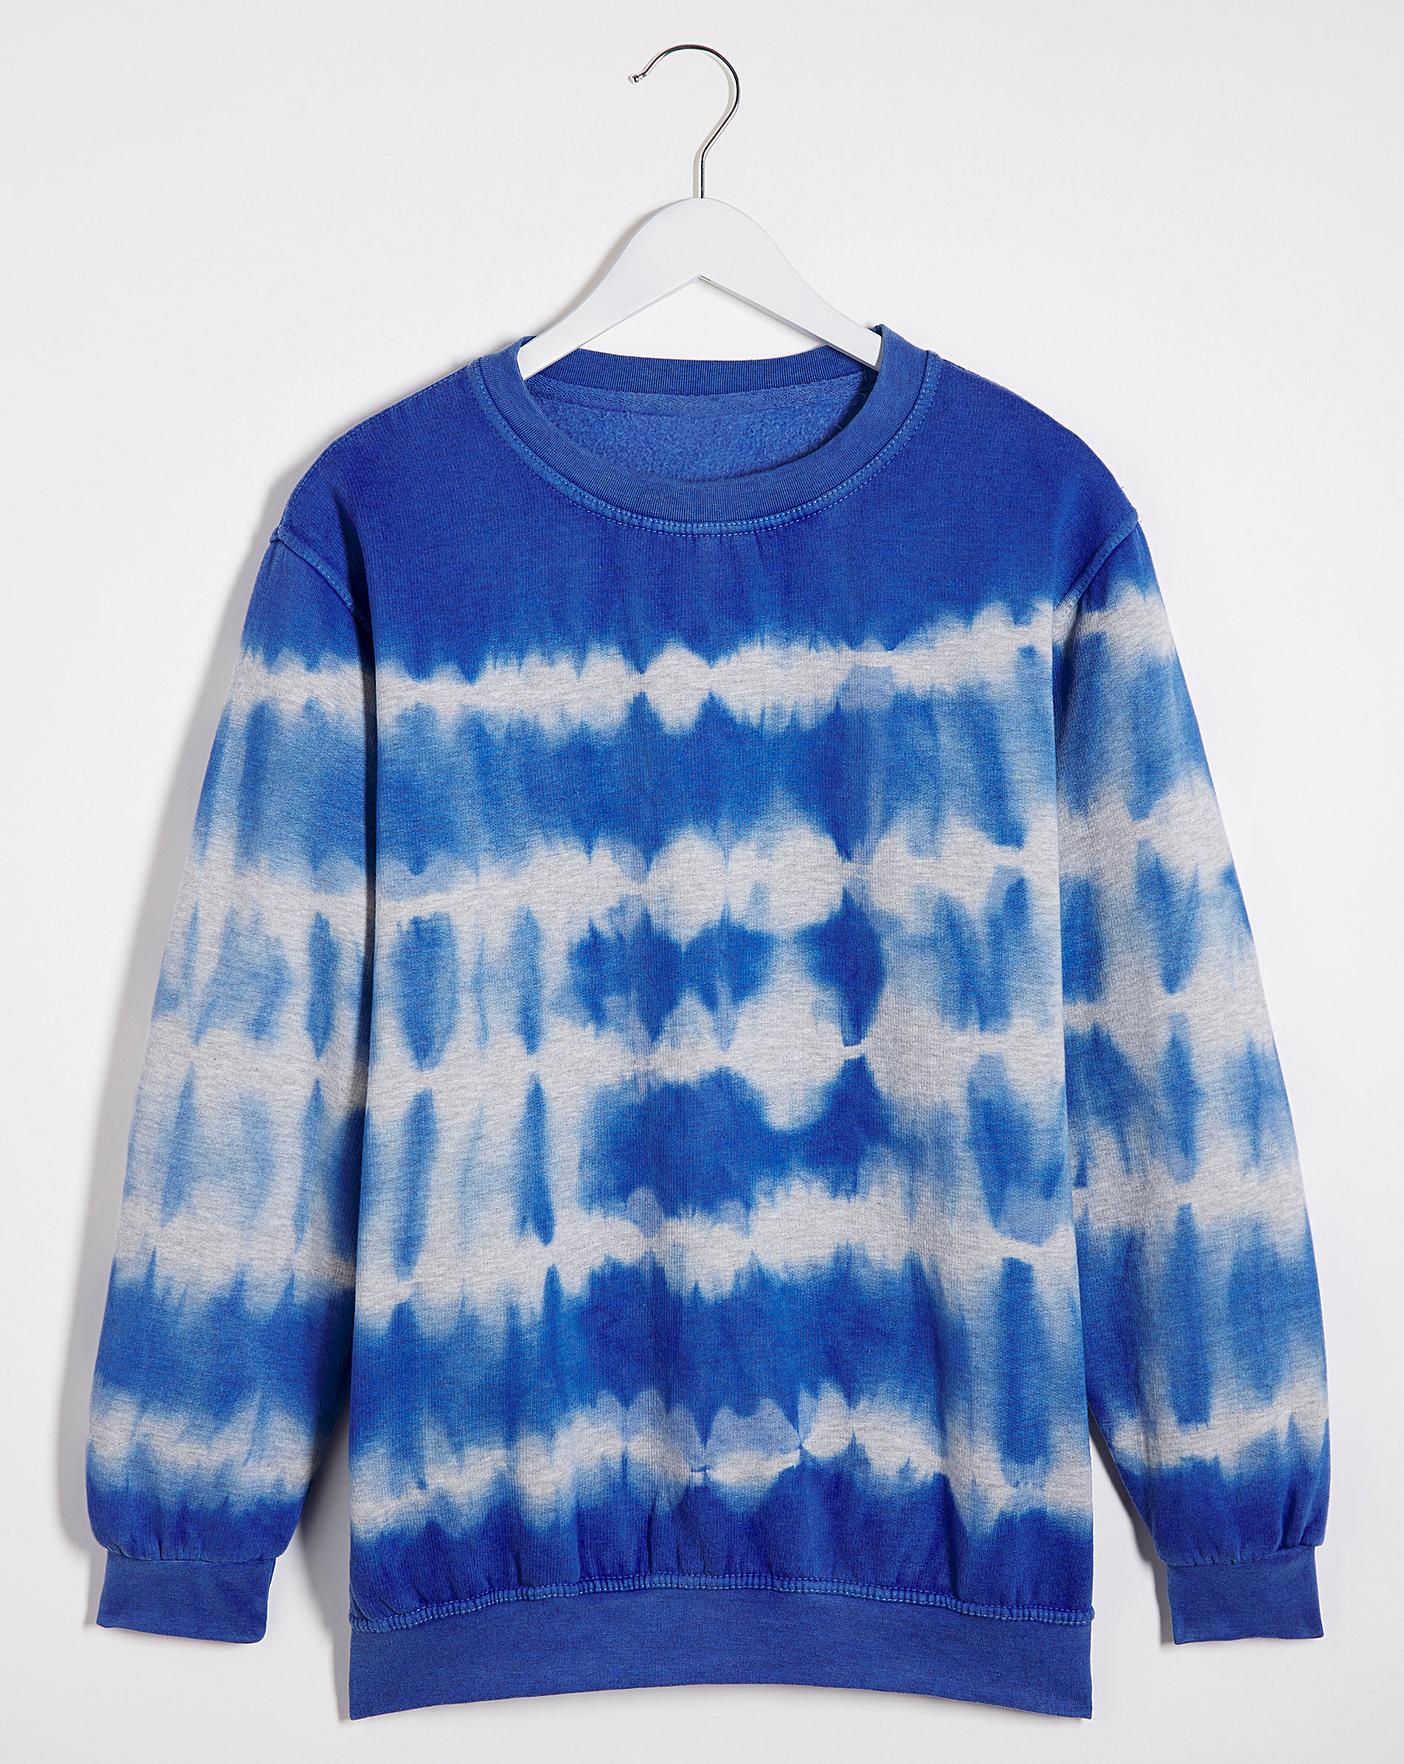 Blue Tie-Dye Sweatshirt | Fashion World